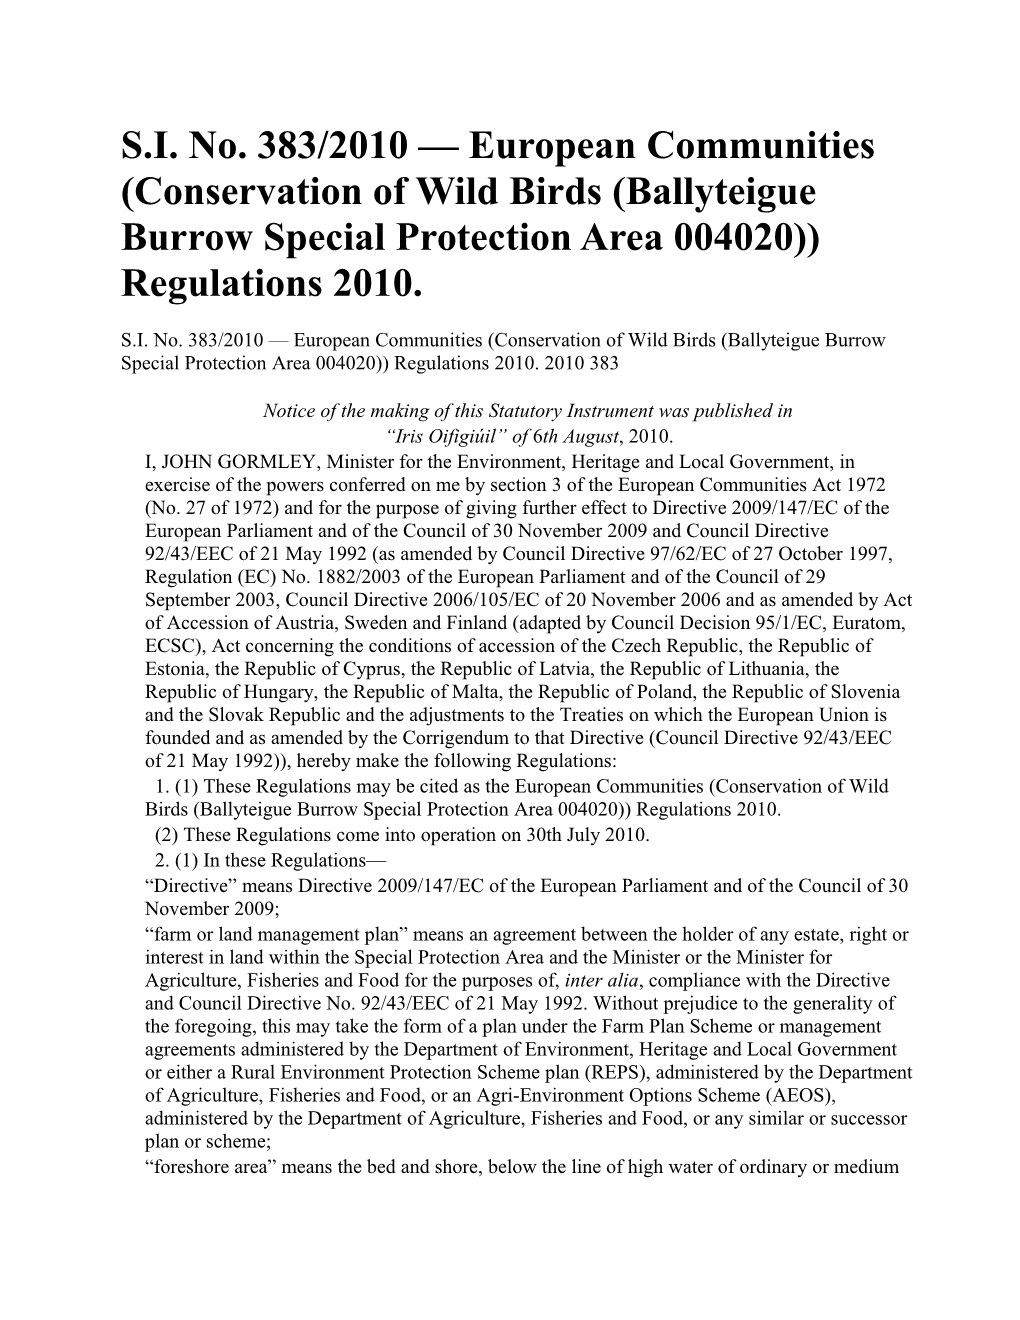 S.I. No. 383/2010 European Communities (Conservation of Wild Birds (Ballyteigue Burrow